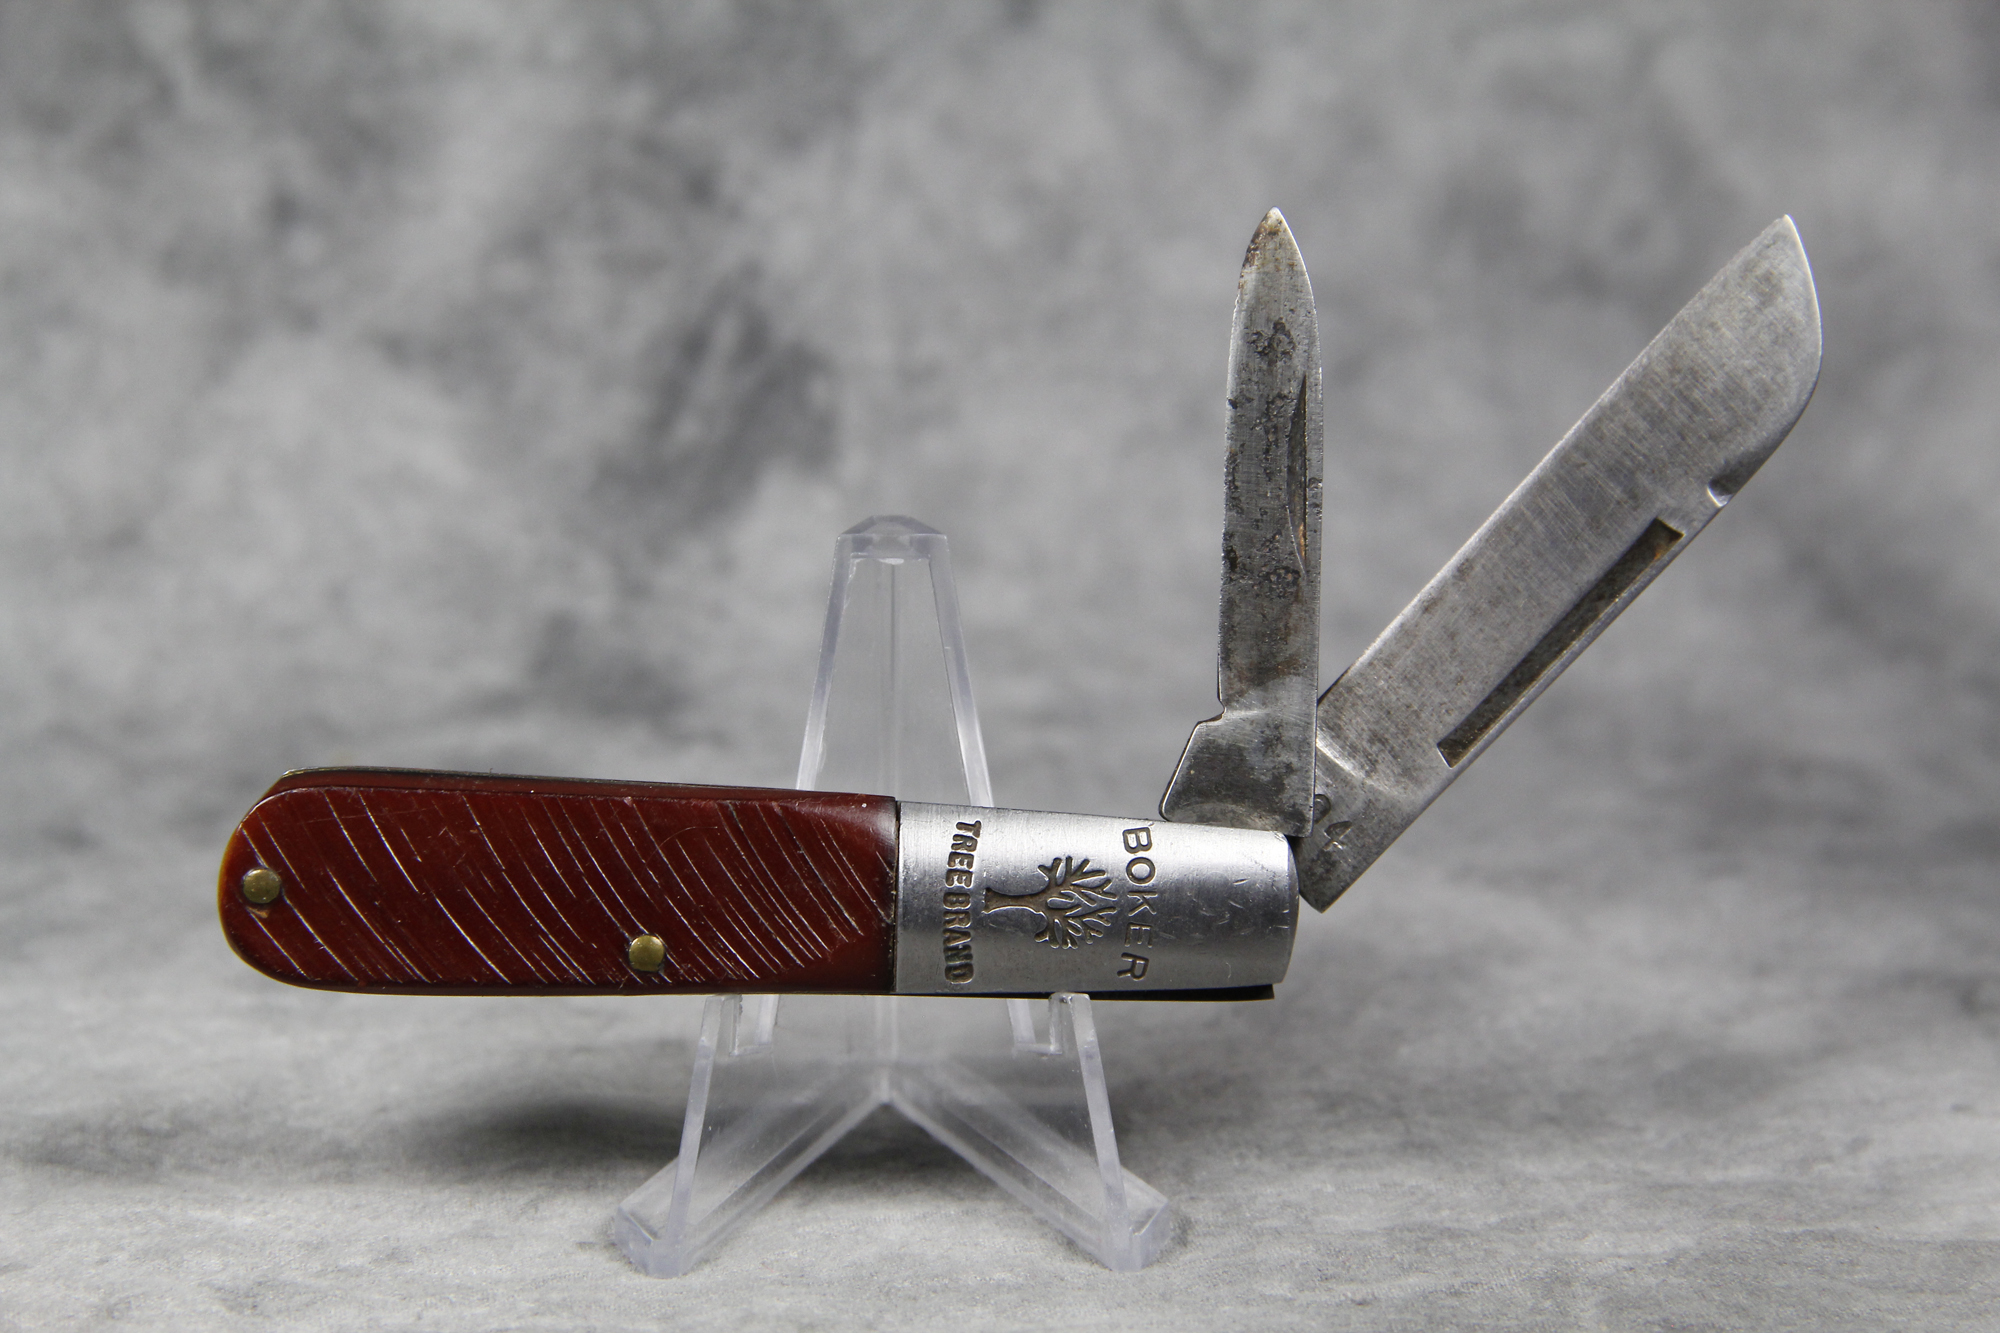 What is a Vintage BOKER TREE BRAND 494 Sawcut Barlow Pocket Knife worth?